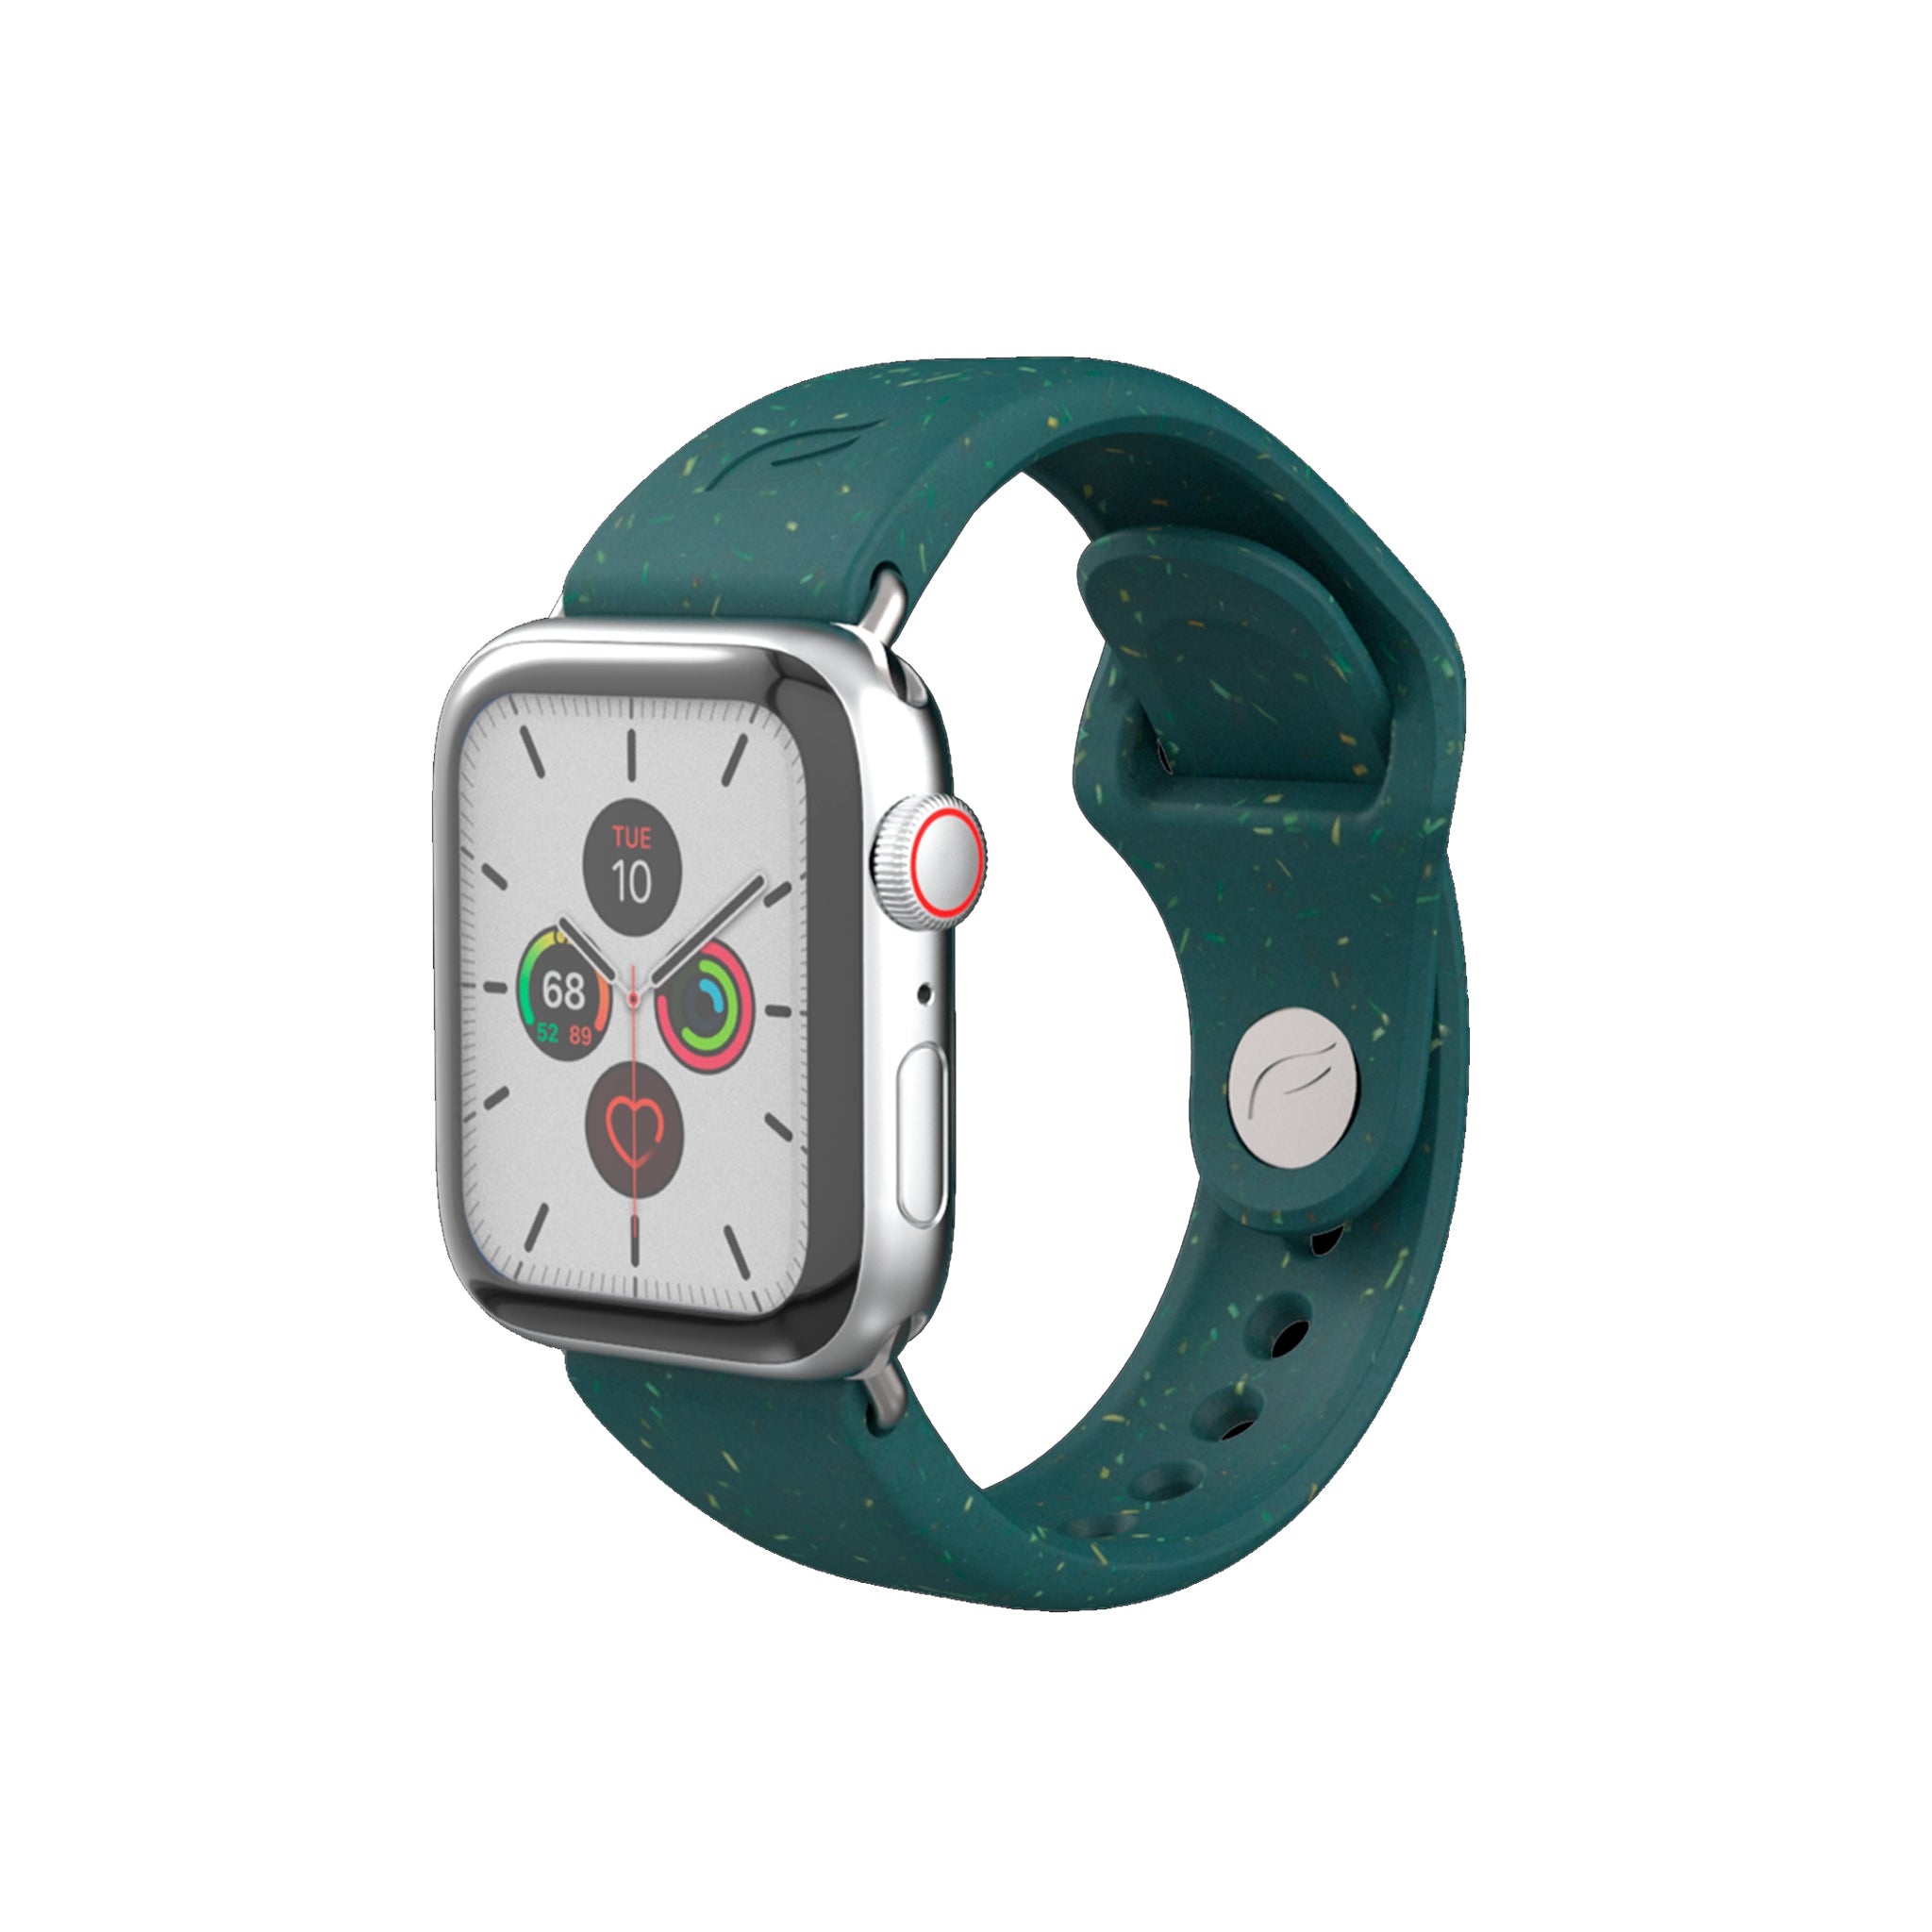 Pela - Vine Eco Friendly Watchband For Apple Watch 38mm / 40mm - Green